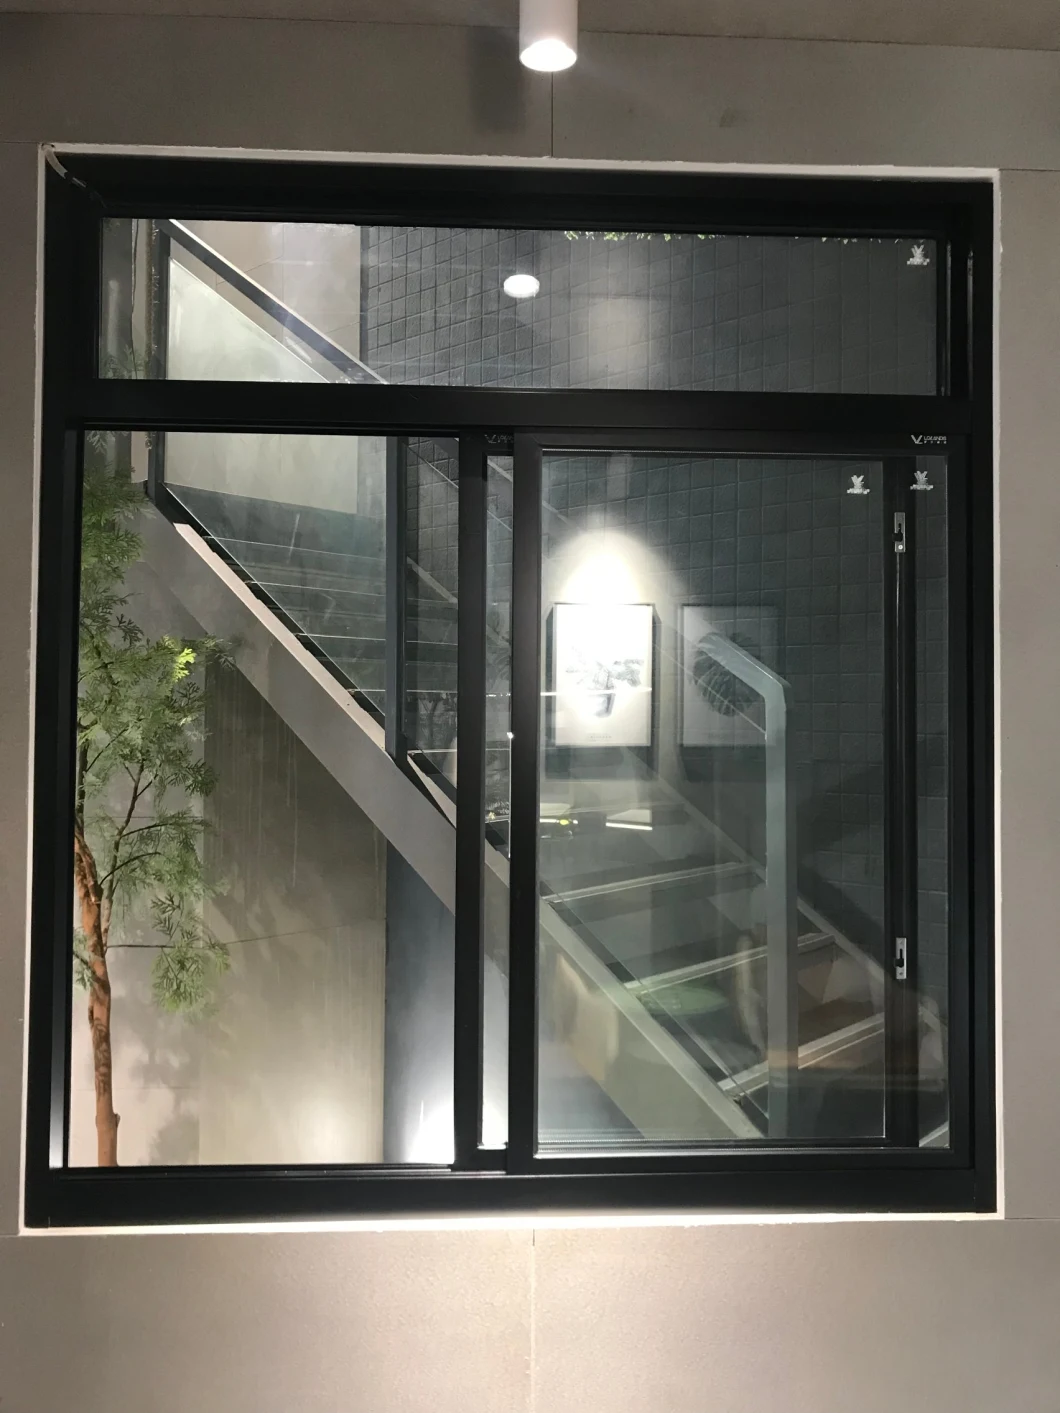 Aluminum Alloy Sliding Door Window with Thermal Break Profile Double Glazed|Types of Sliding Windows